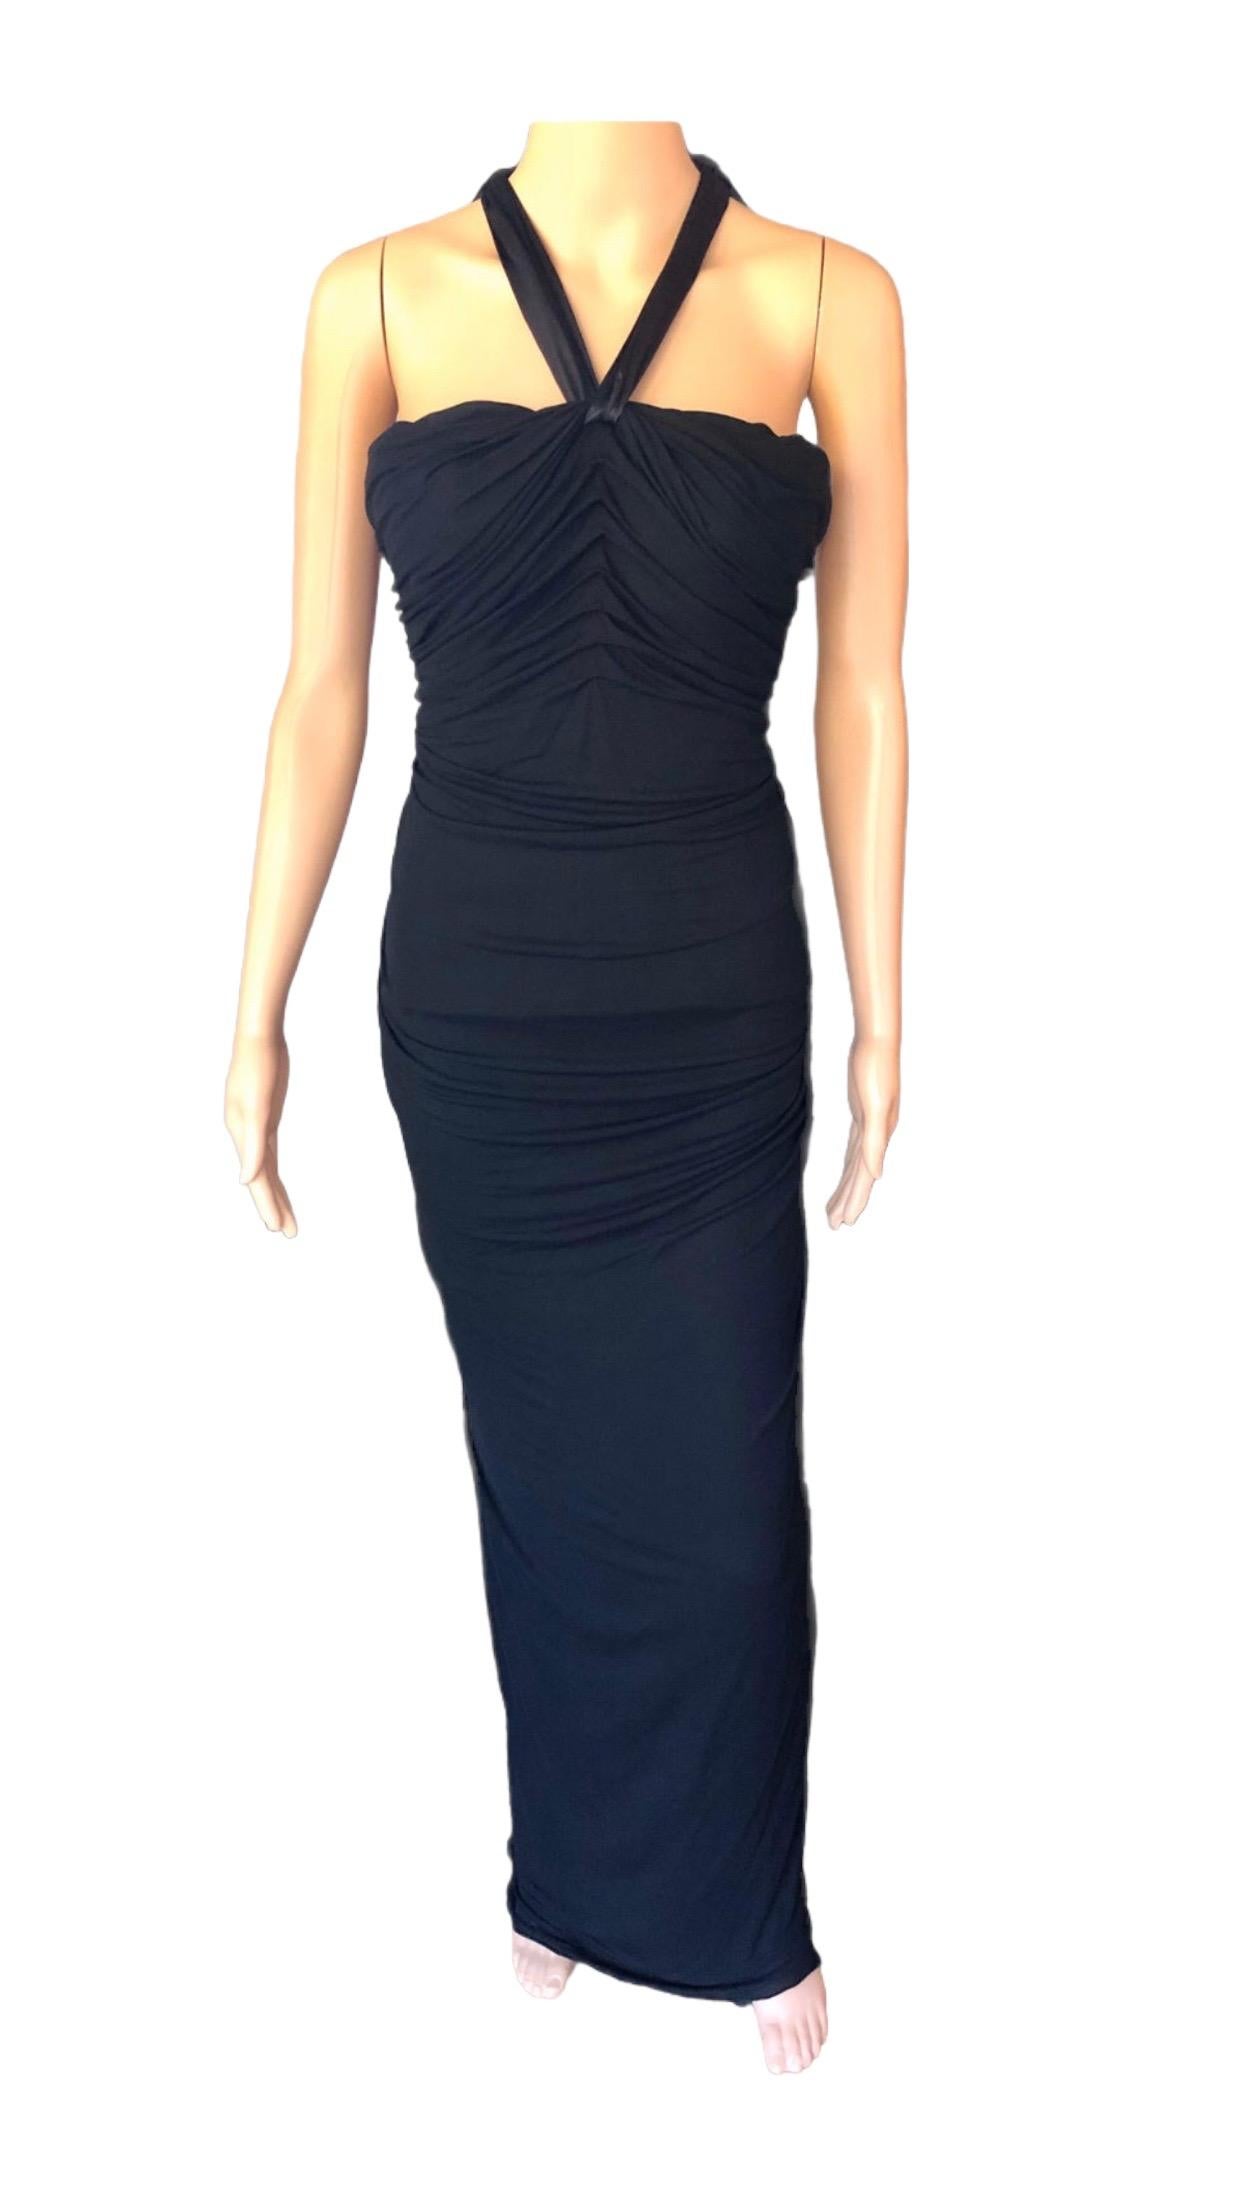 Dolce & Gabbana c.2000 Halter Cutout Open Back Black Evening Dress Gown For Sale 4